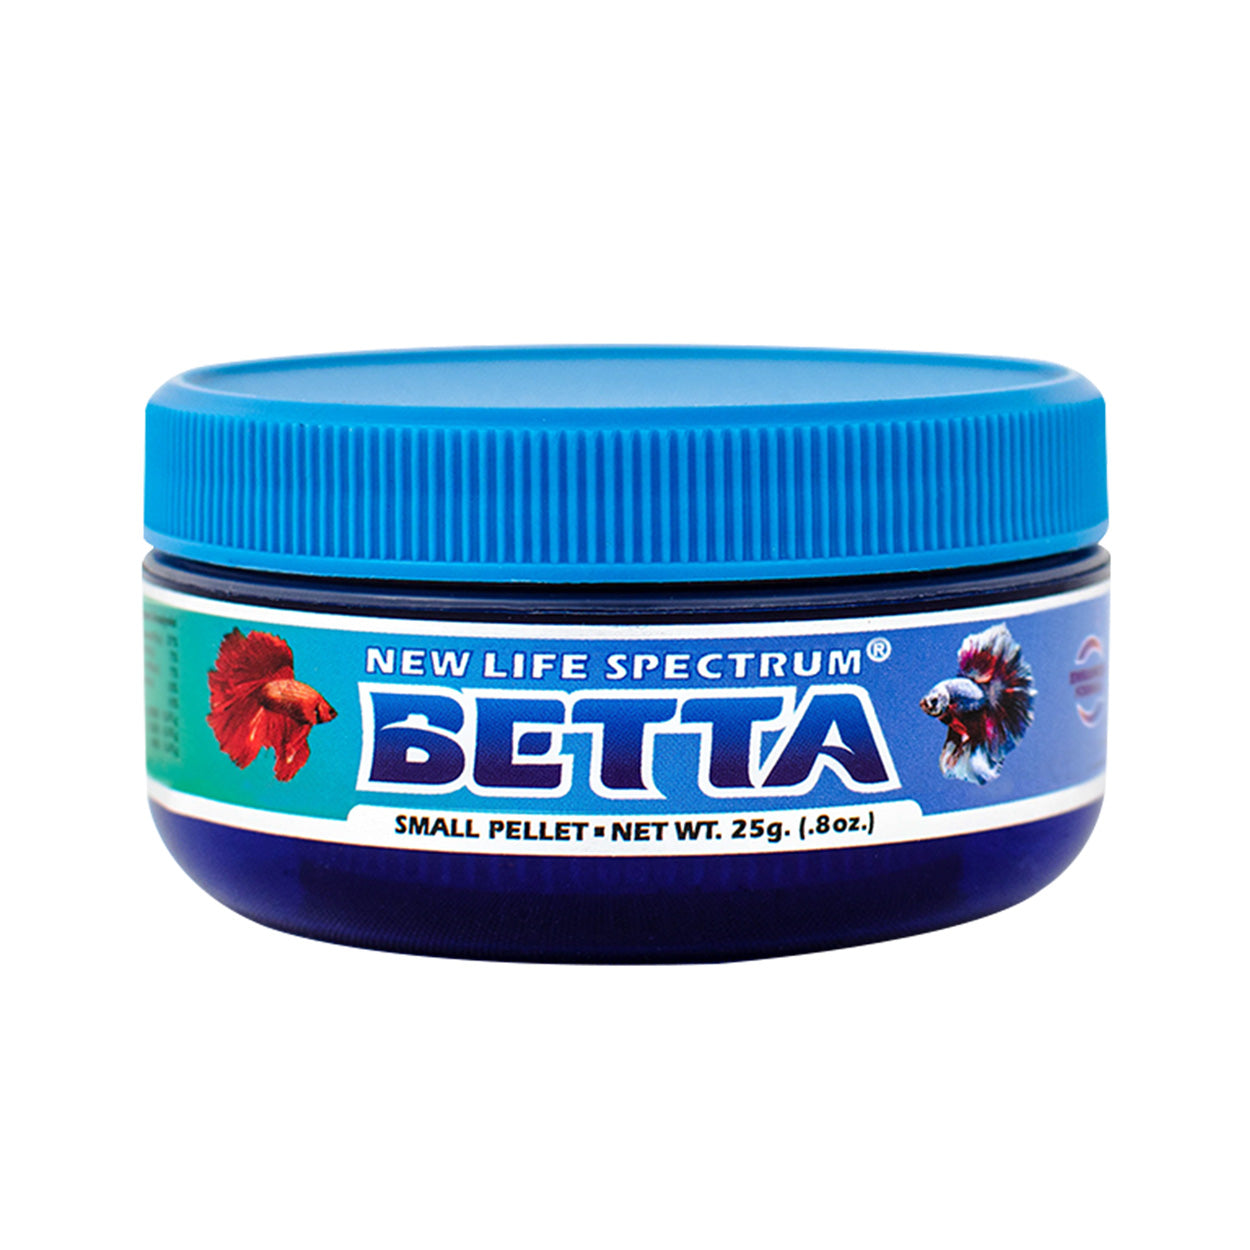 New Life Spectrum Naturox Betta 1-1.5mm Semi-Floating Pellets - 25 g